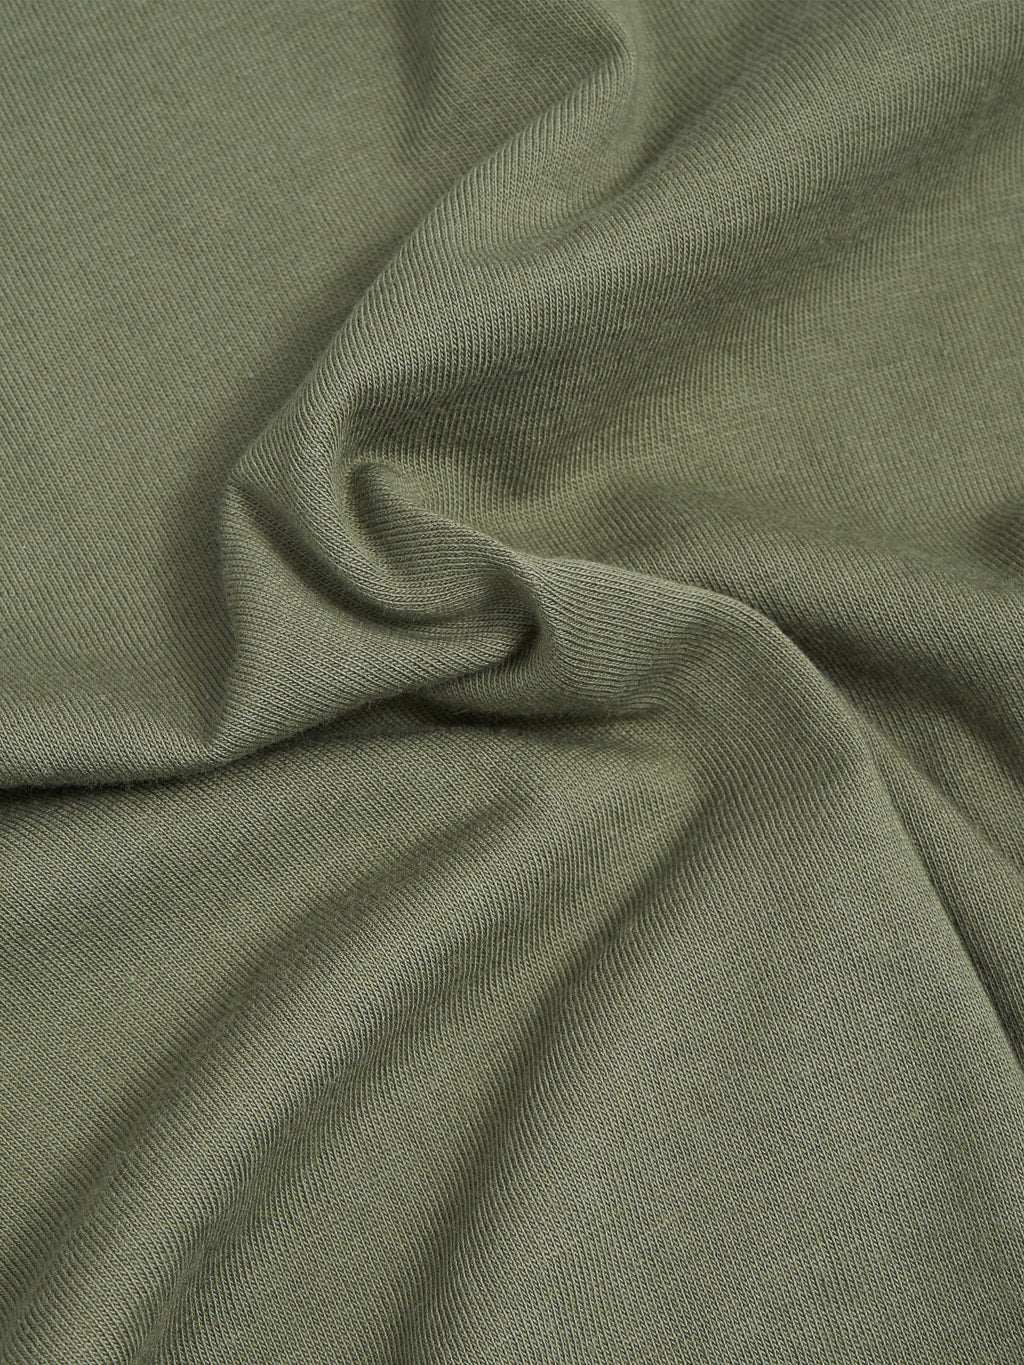 Merz b Schwanen 1950s Loopwheeled Classic TShirt army green cotton fabric